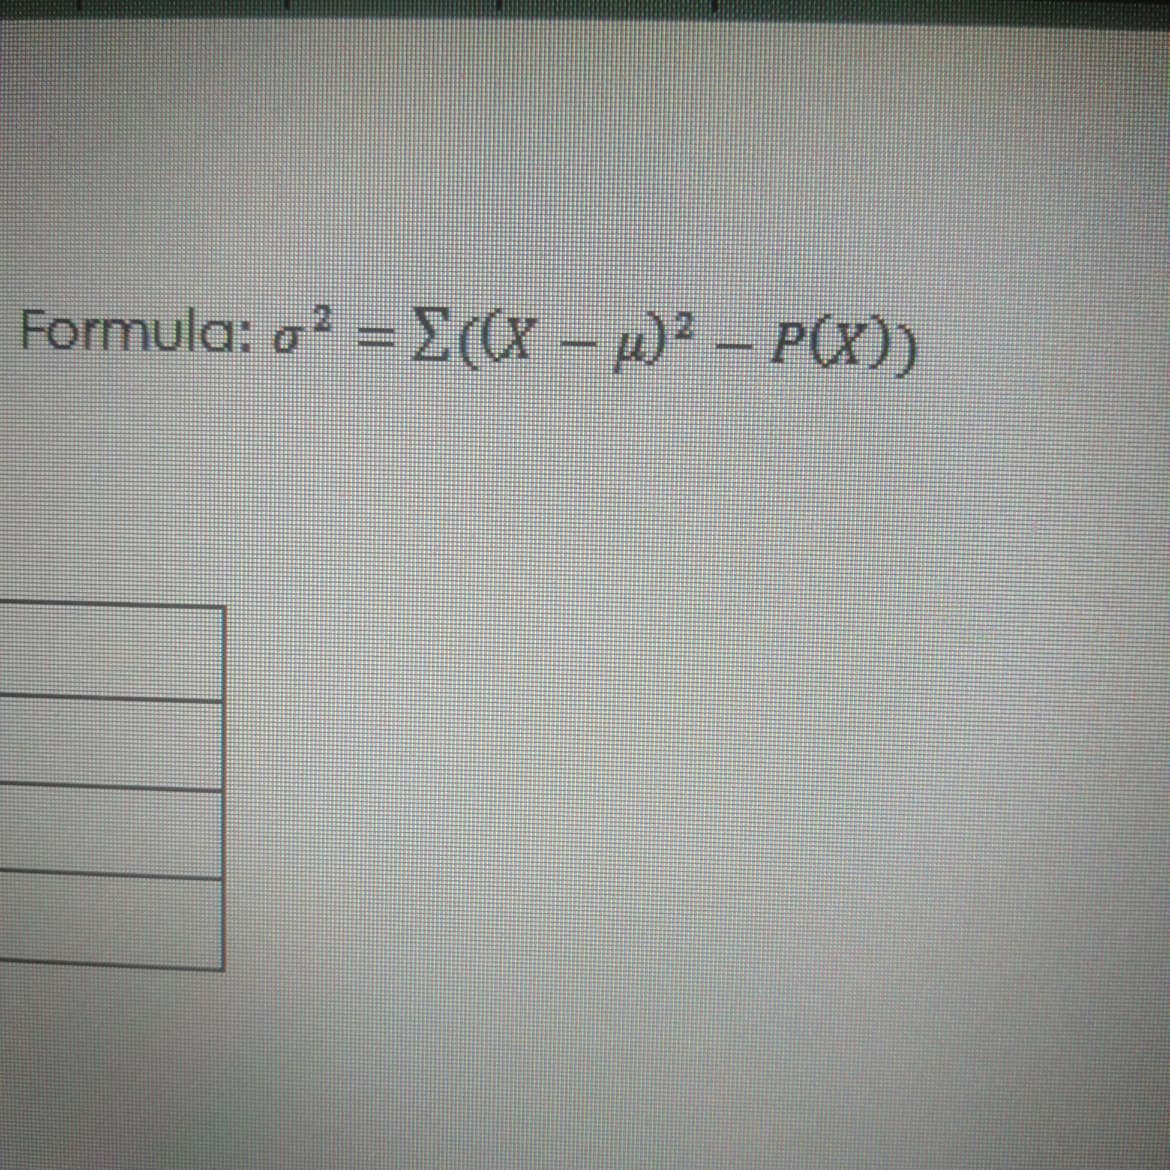 Formula: a? = E(CX -p)2 - P(X))
